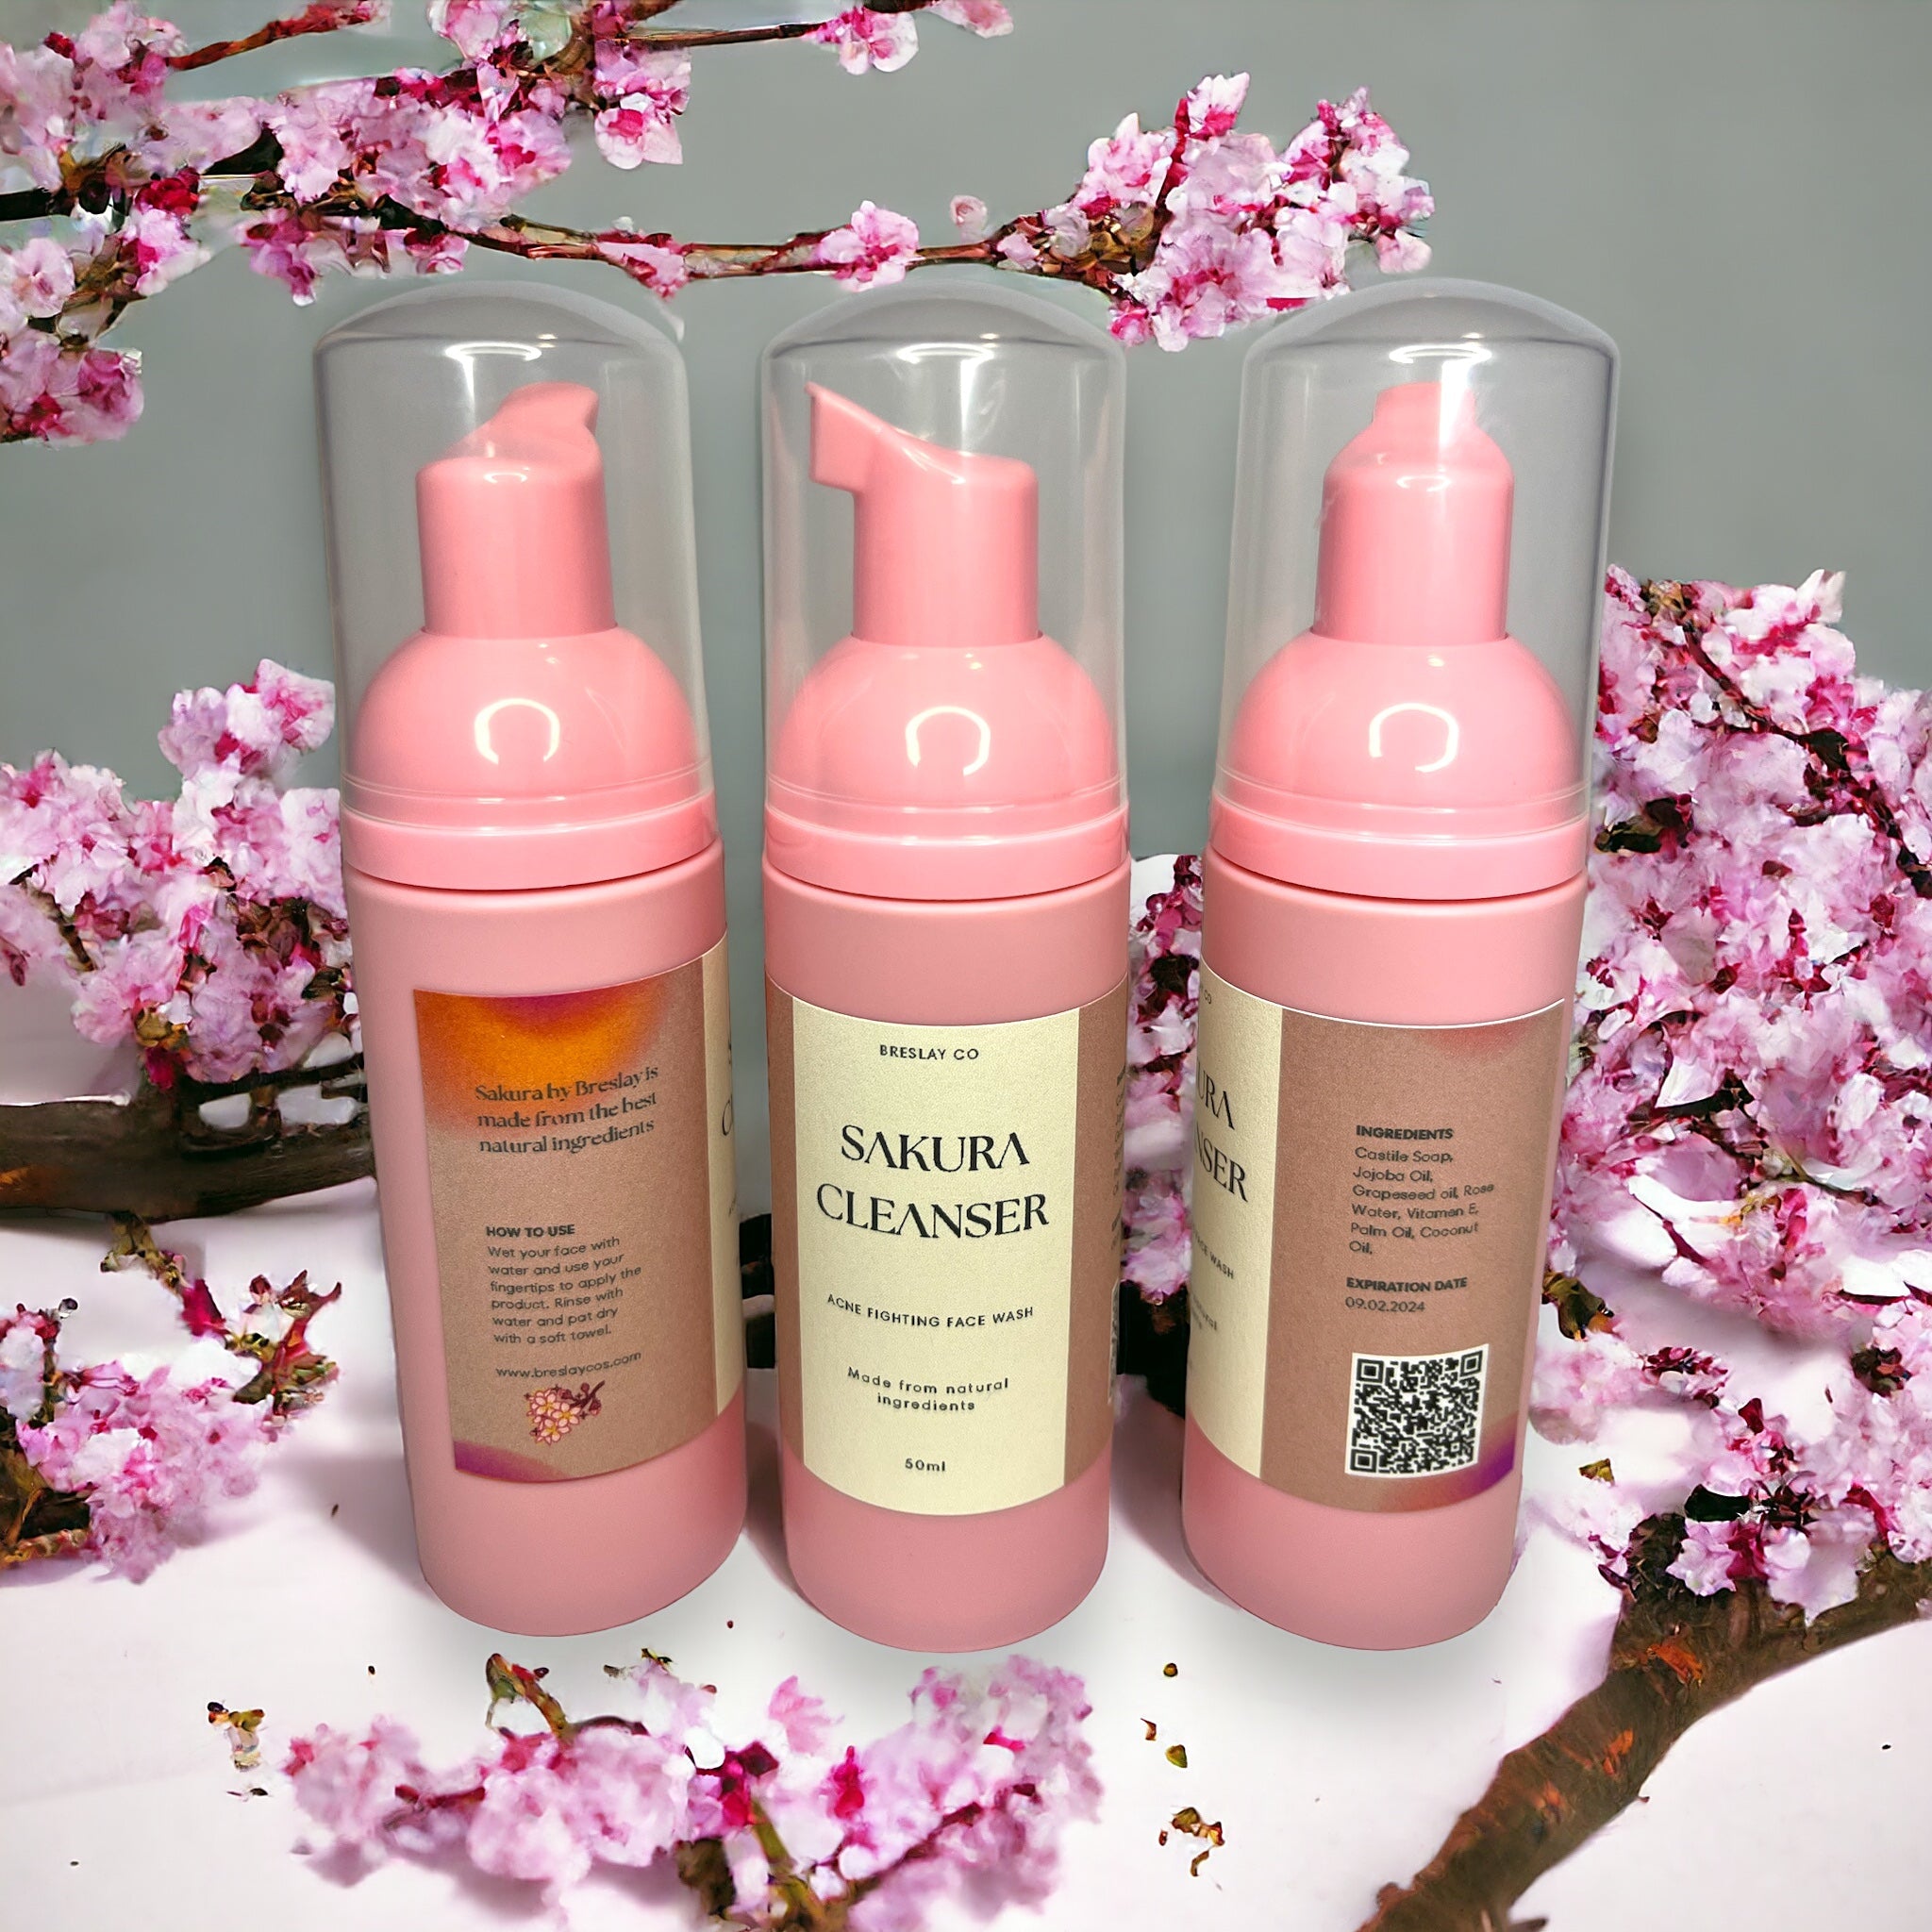 Sakura Cleanser | Acne Fighting Face Wash